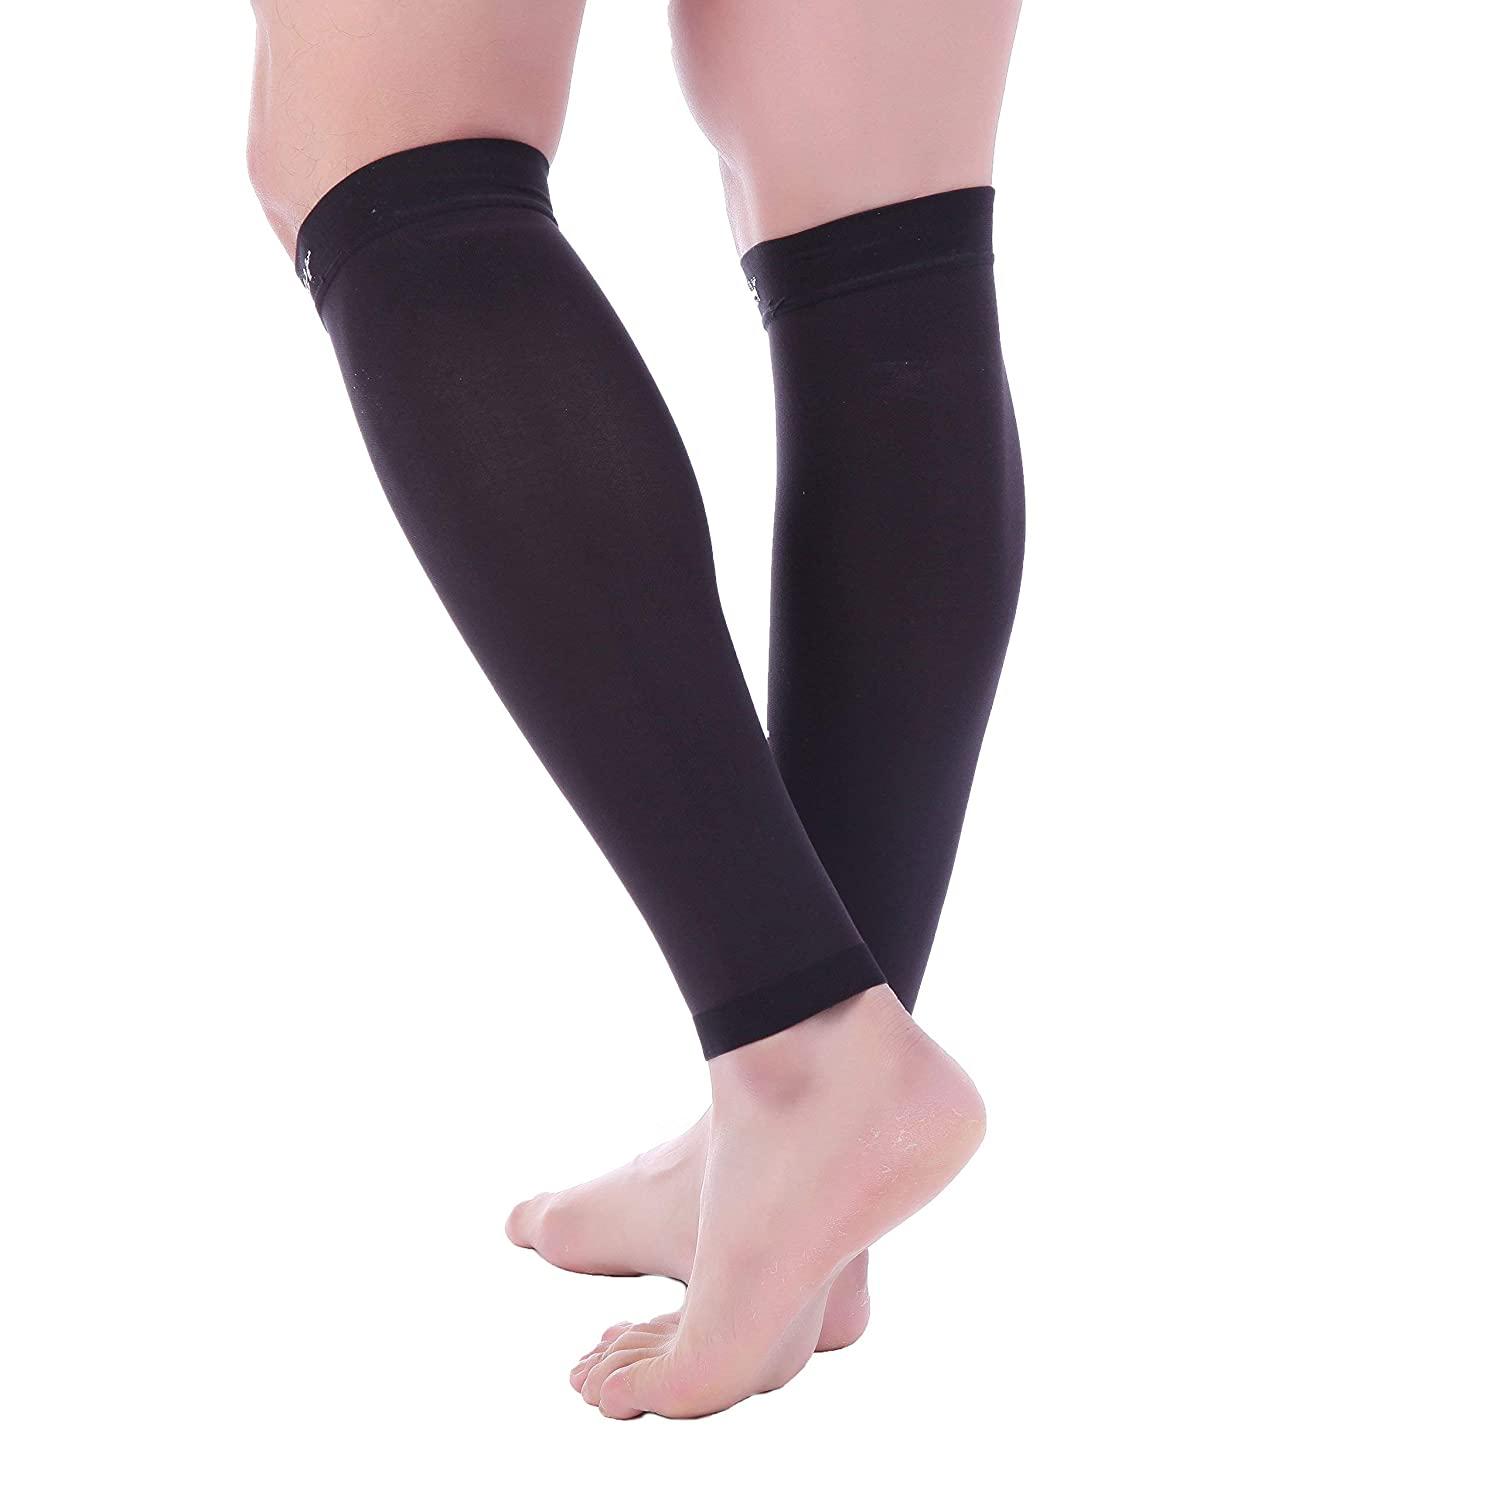  Doc Miller Open Toe Compression Socks Women and Men, 20-30 mmHg  Toeless Compression Socks Women, Recovery Support Circulation Shin Splints  Varicose Veins (Black, Small) : Health & Household